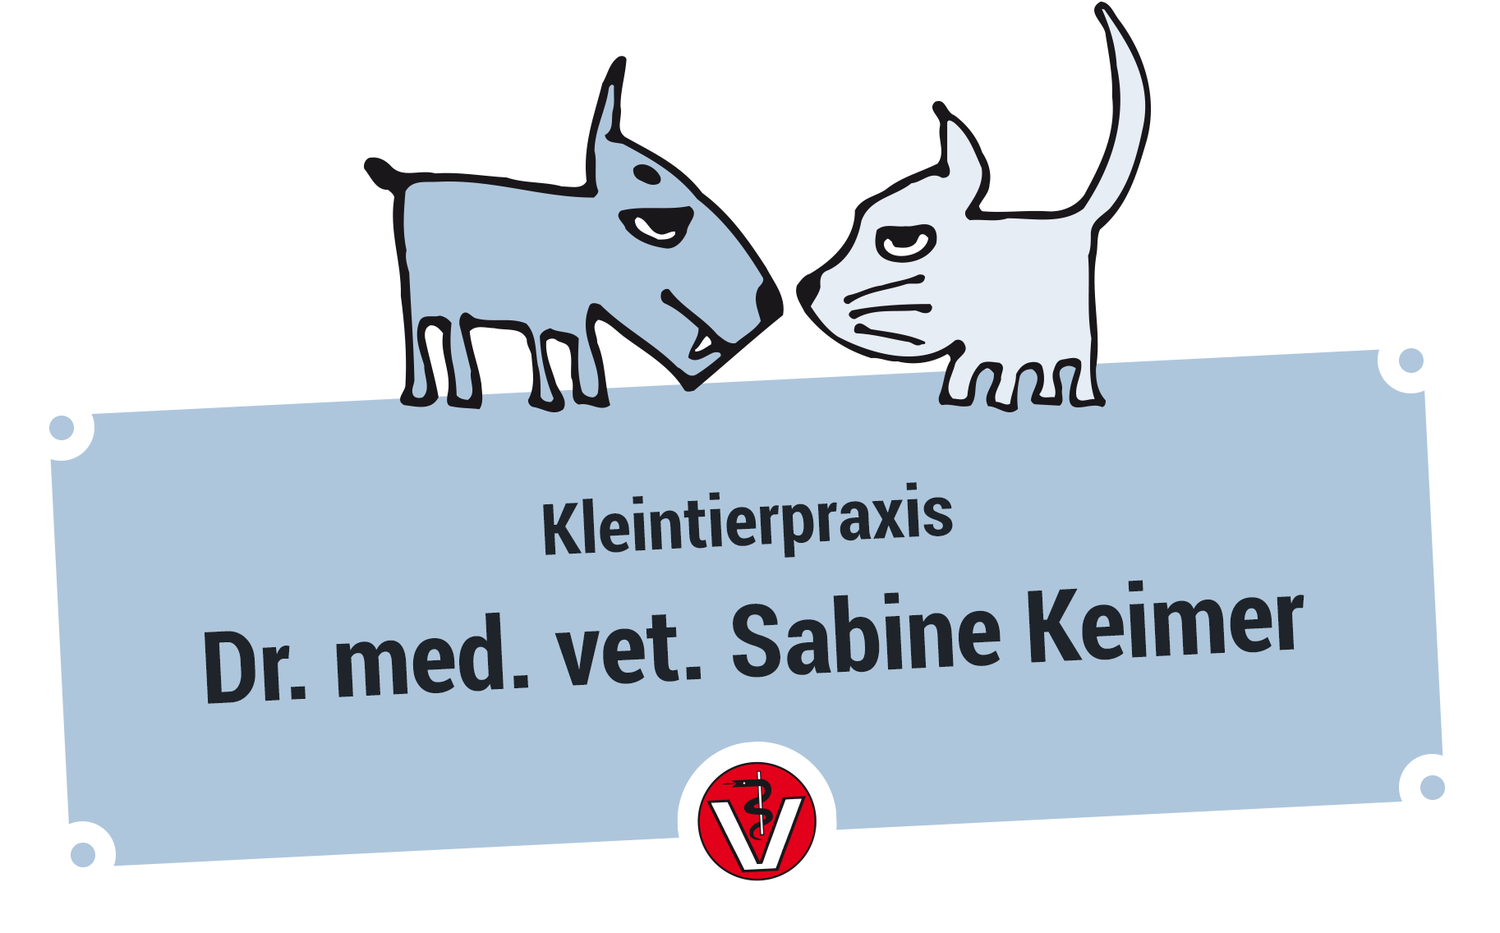 Kleintierpraxis Dr. med. vet. Sabine Keimer